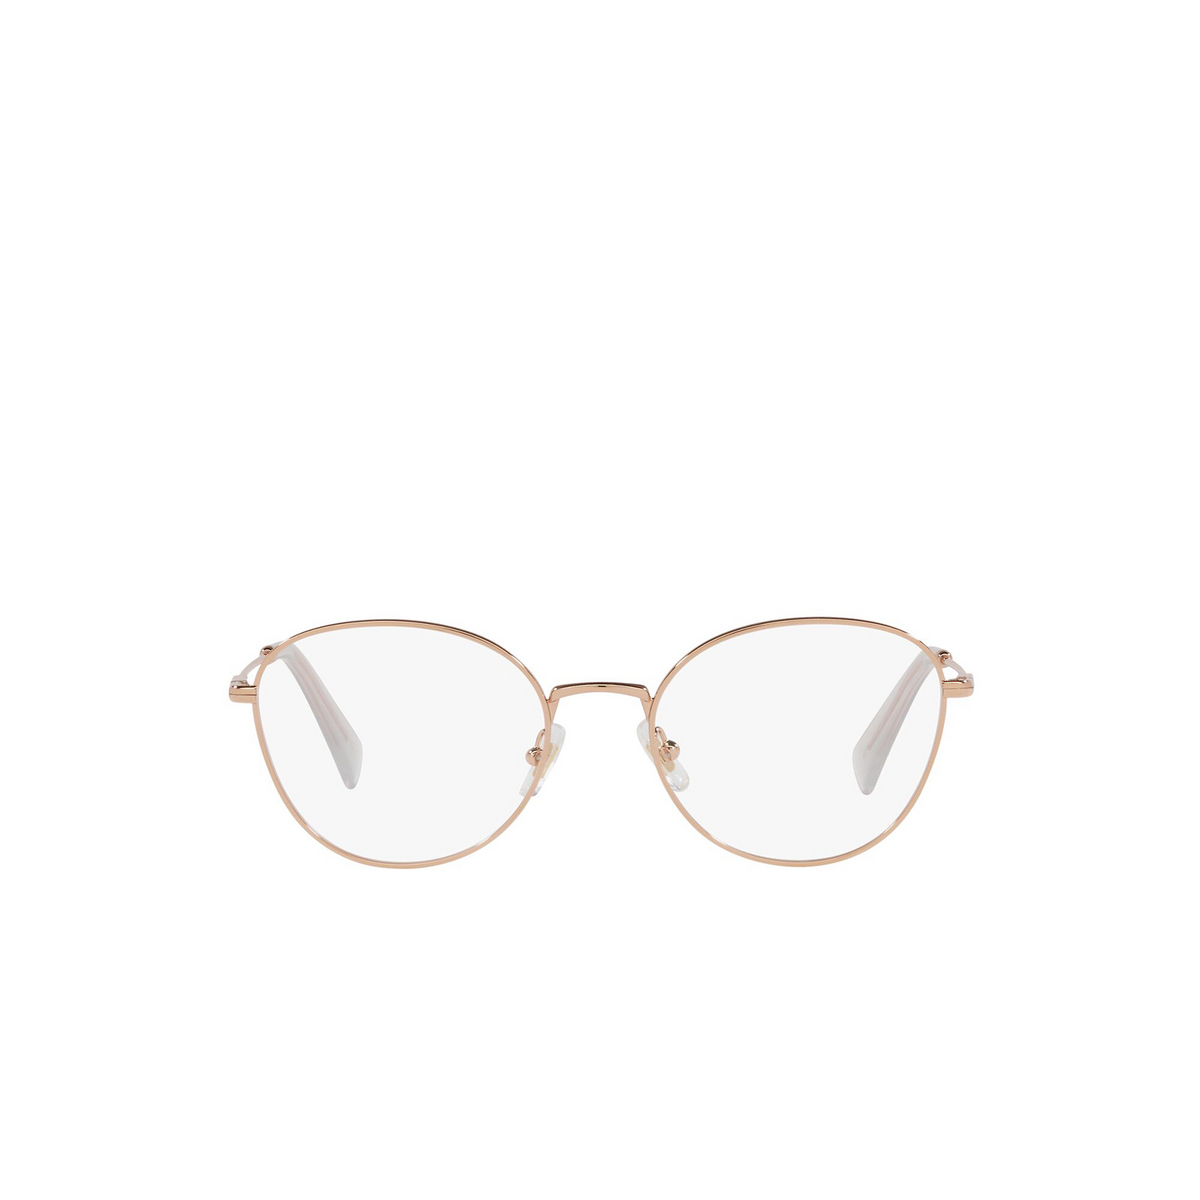 Miu Miu® Cat-eye Eyeglasses: MU 50UV color Rose Gold SVF1O1 - front view.